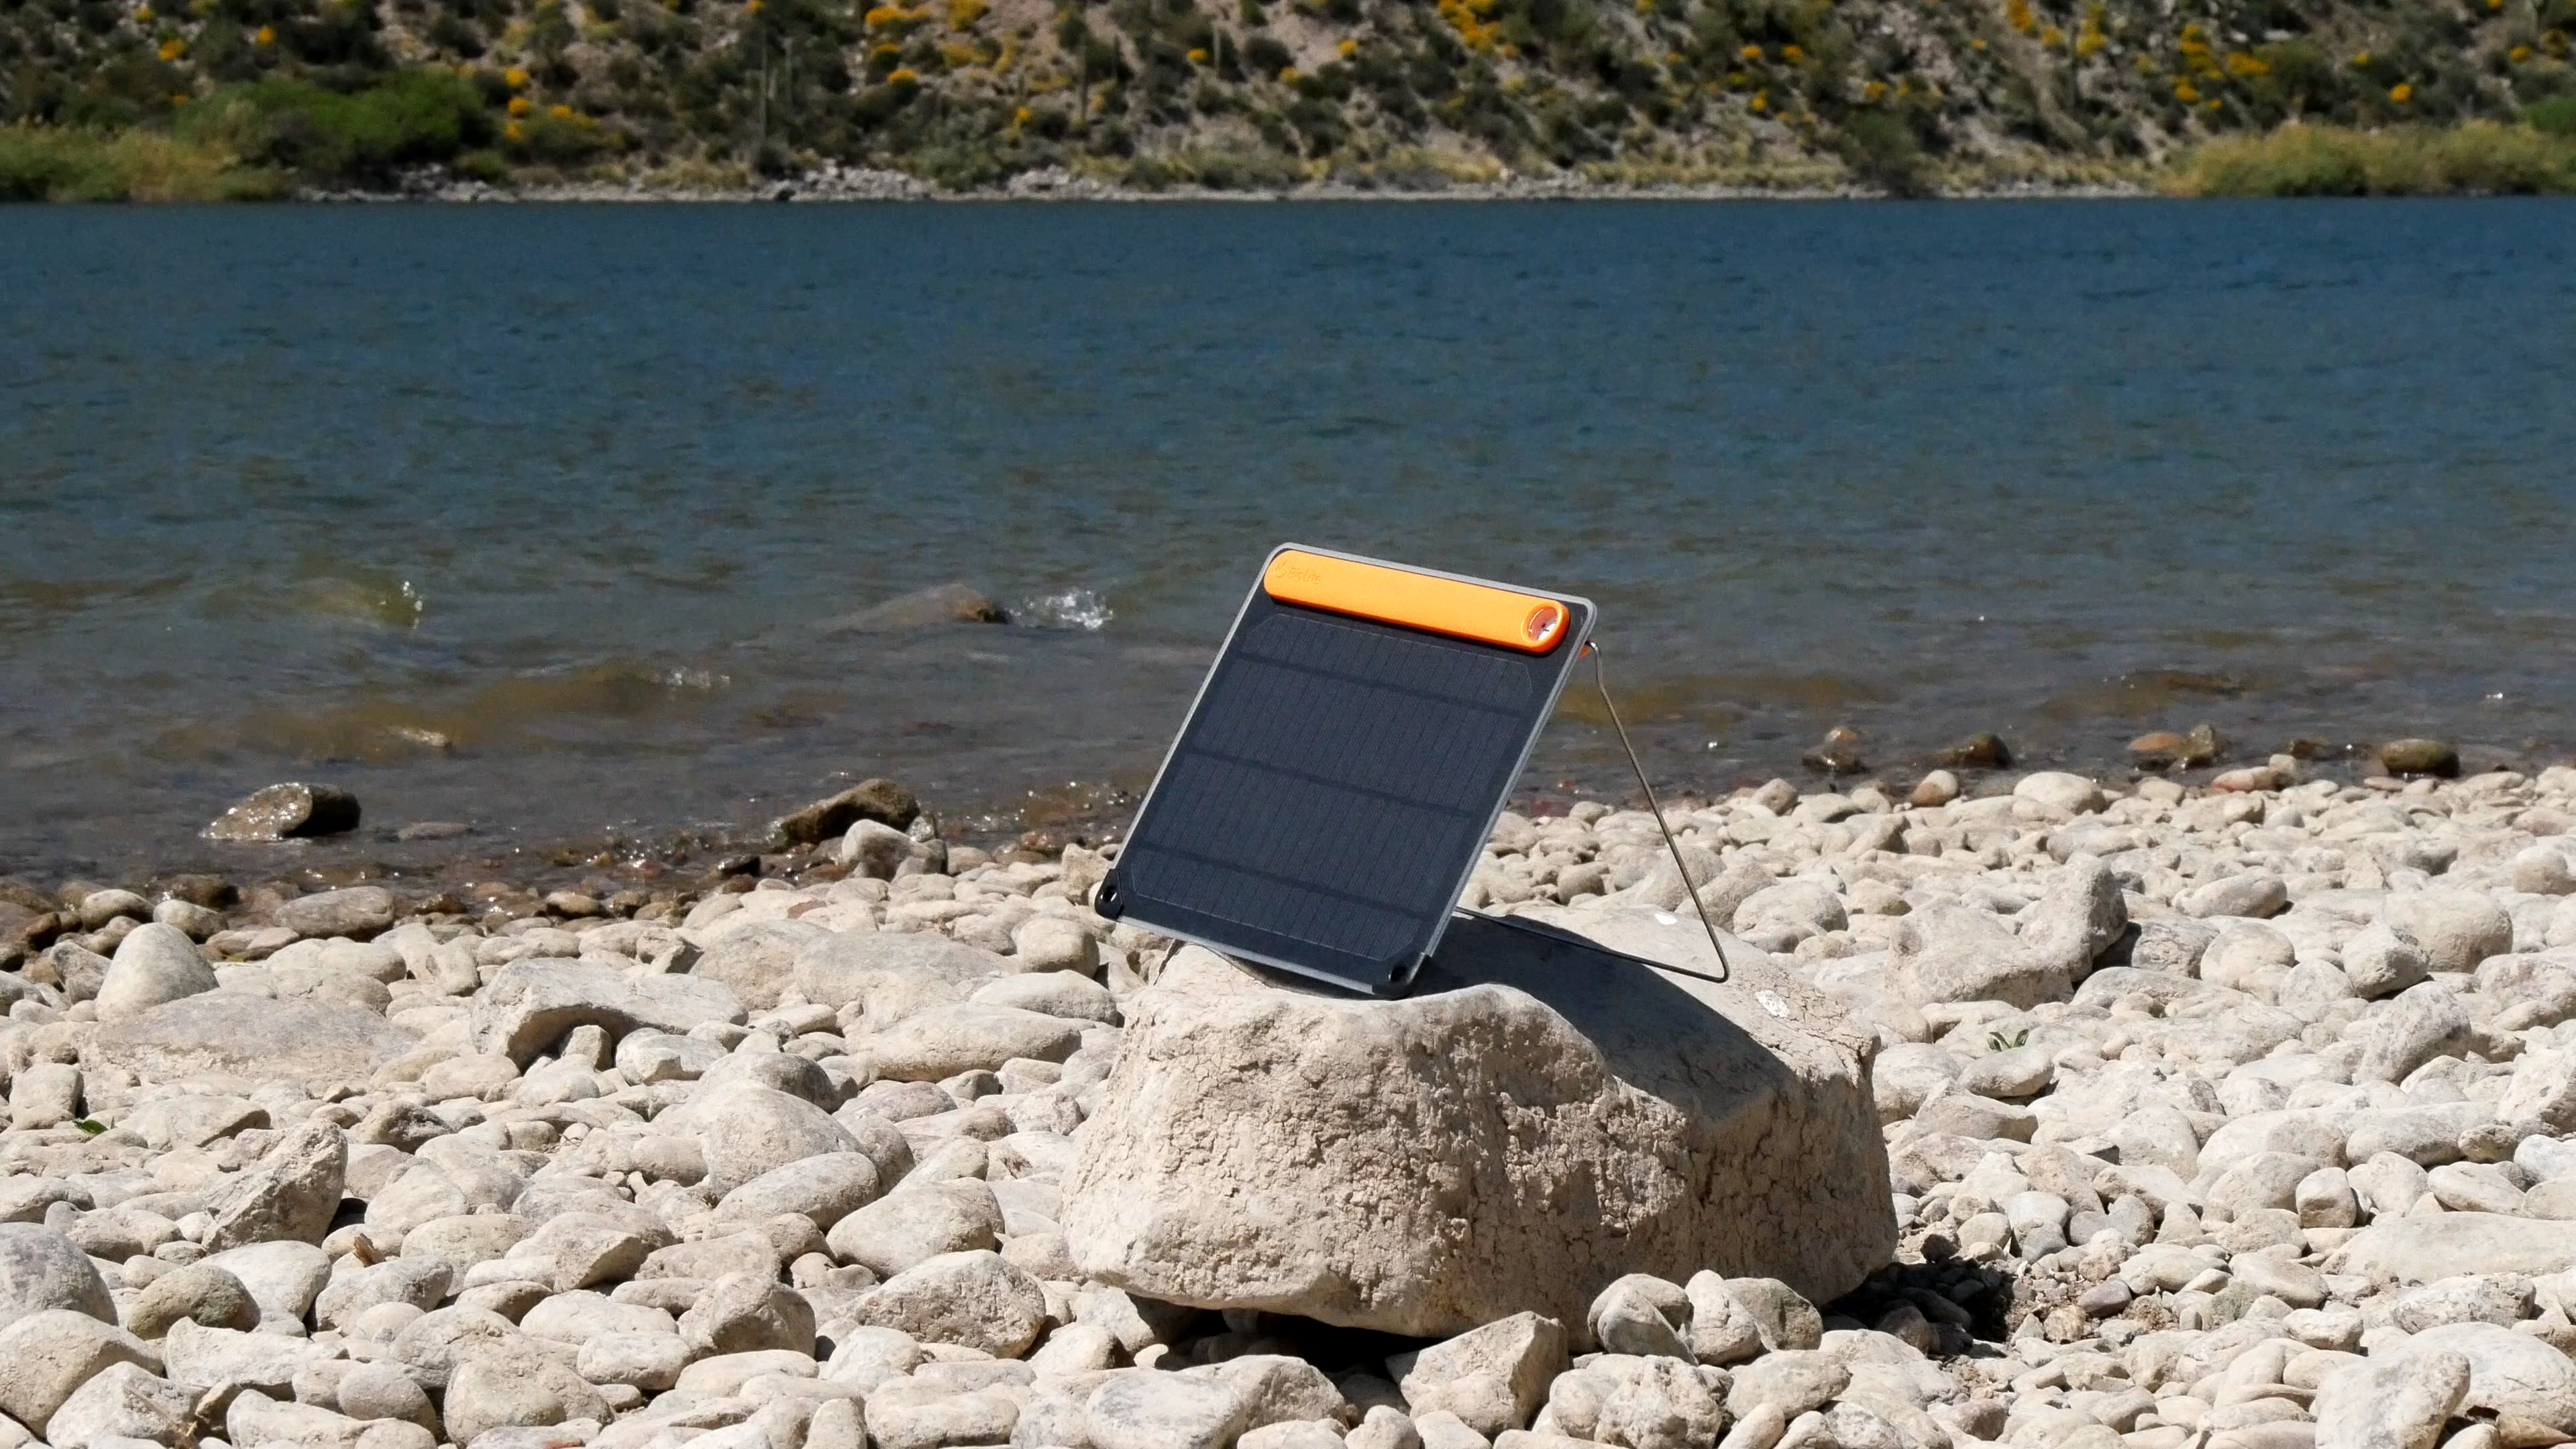 biolite solarpanel powerlight mini video review 01